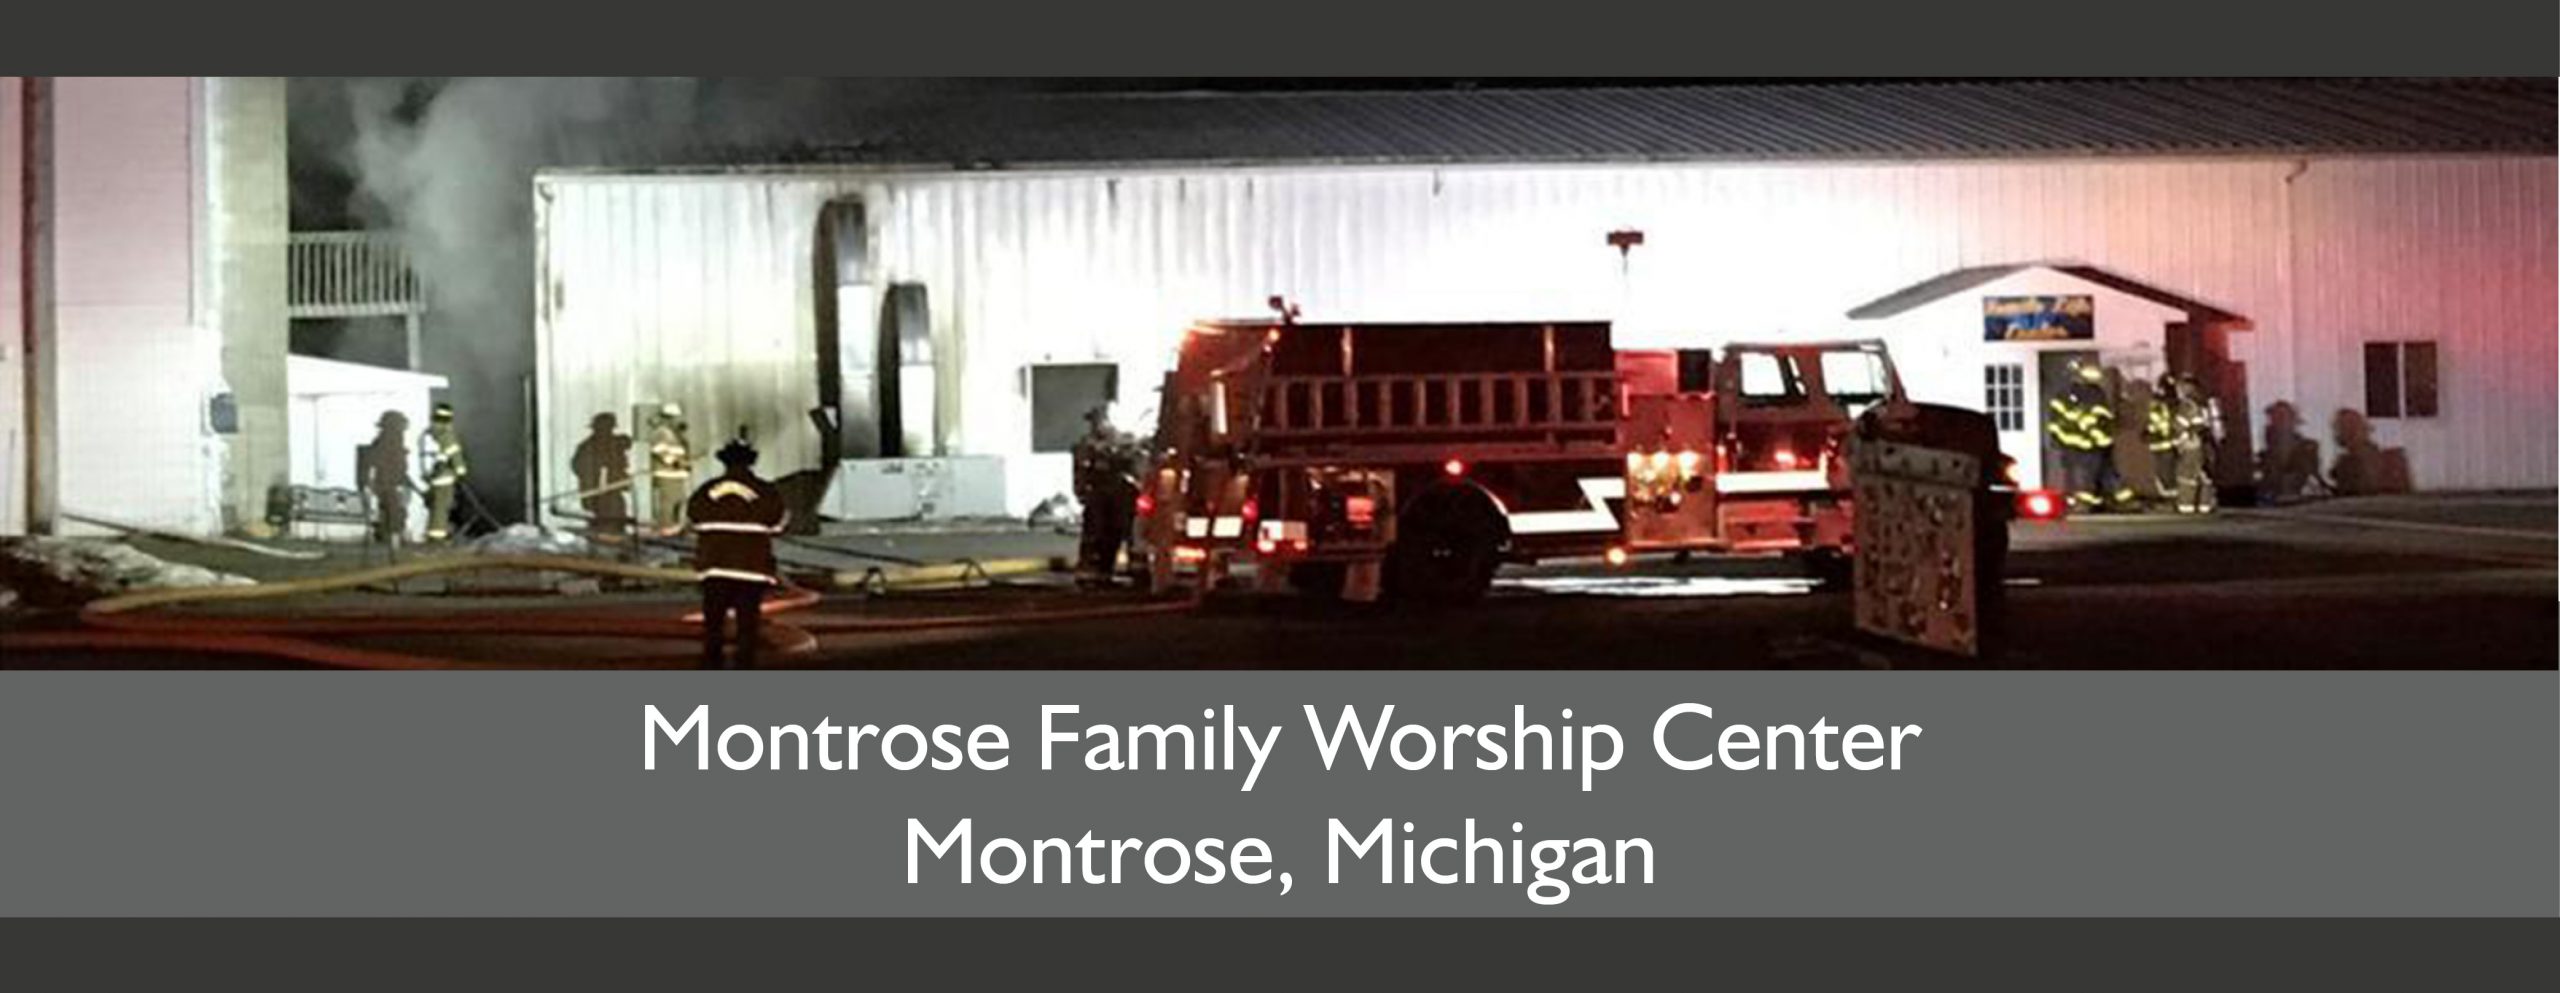 Vivid Design Group Montrose Family Worship Center Header image Case Study